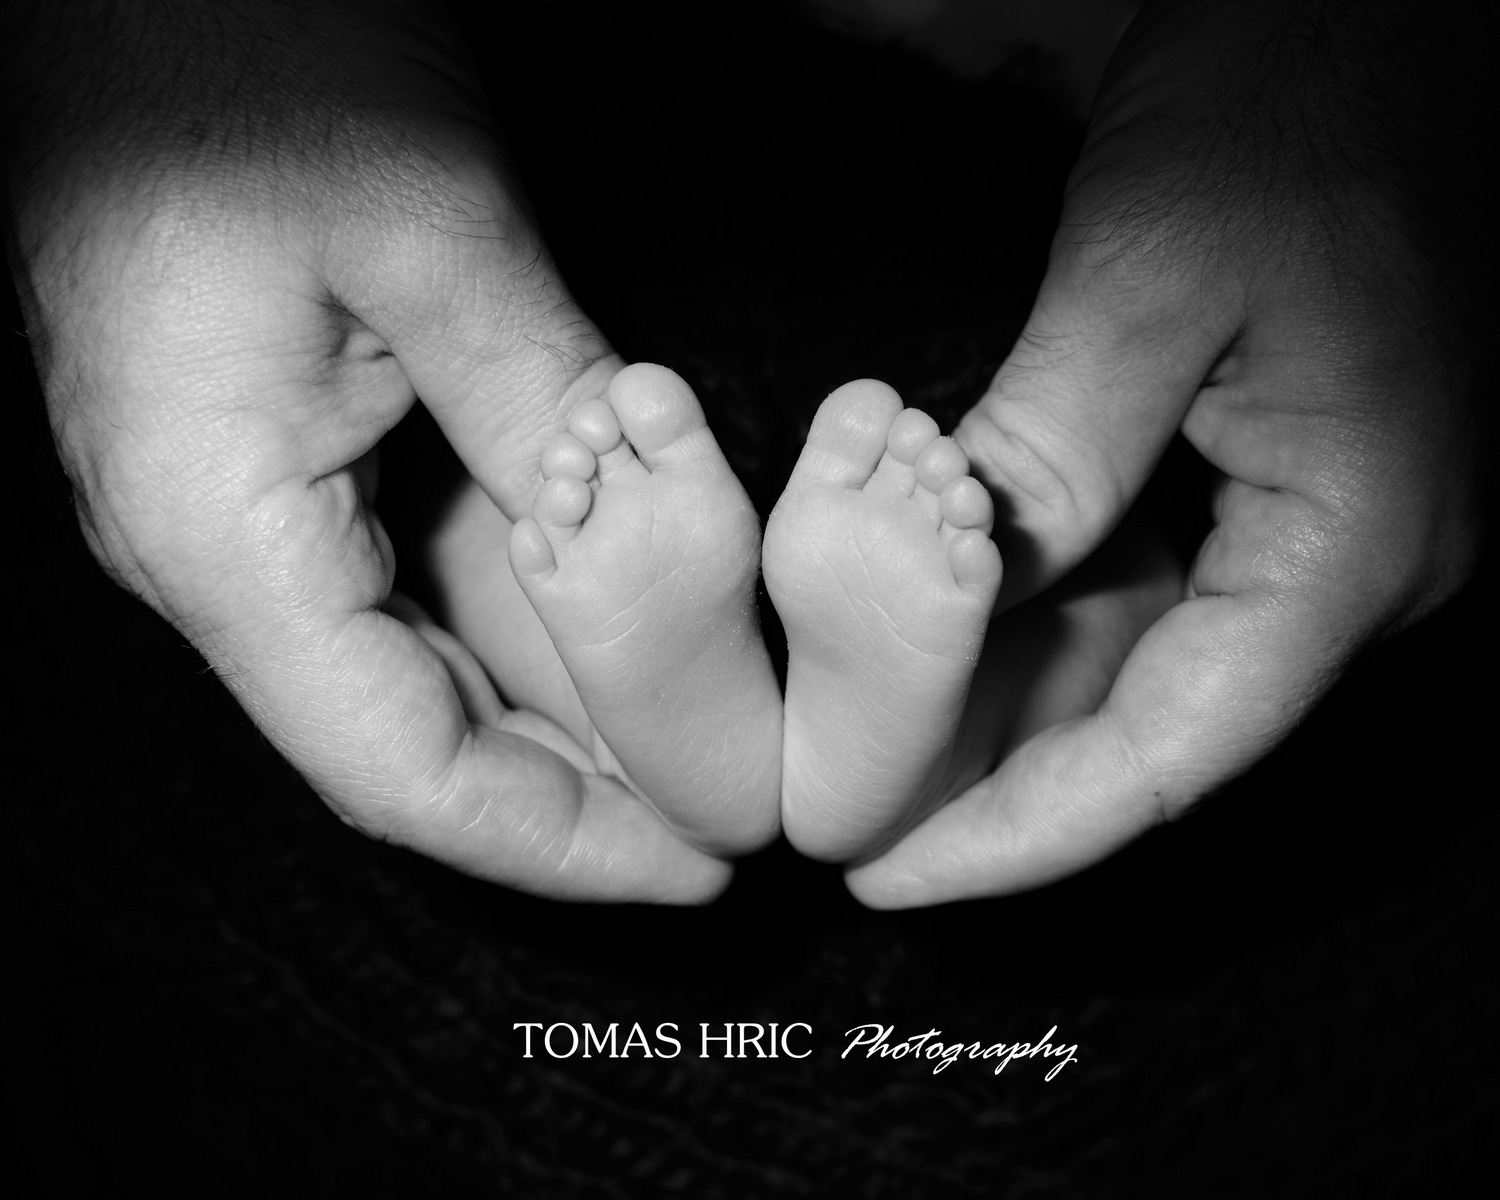 Tomas Hric Photography Newborn photographer in northern virginia mother father holding newborn tiny feet